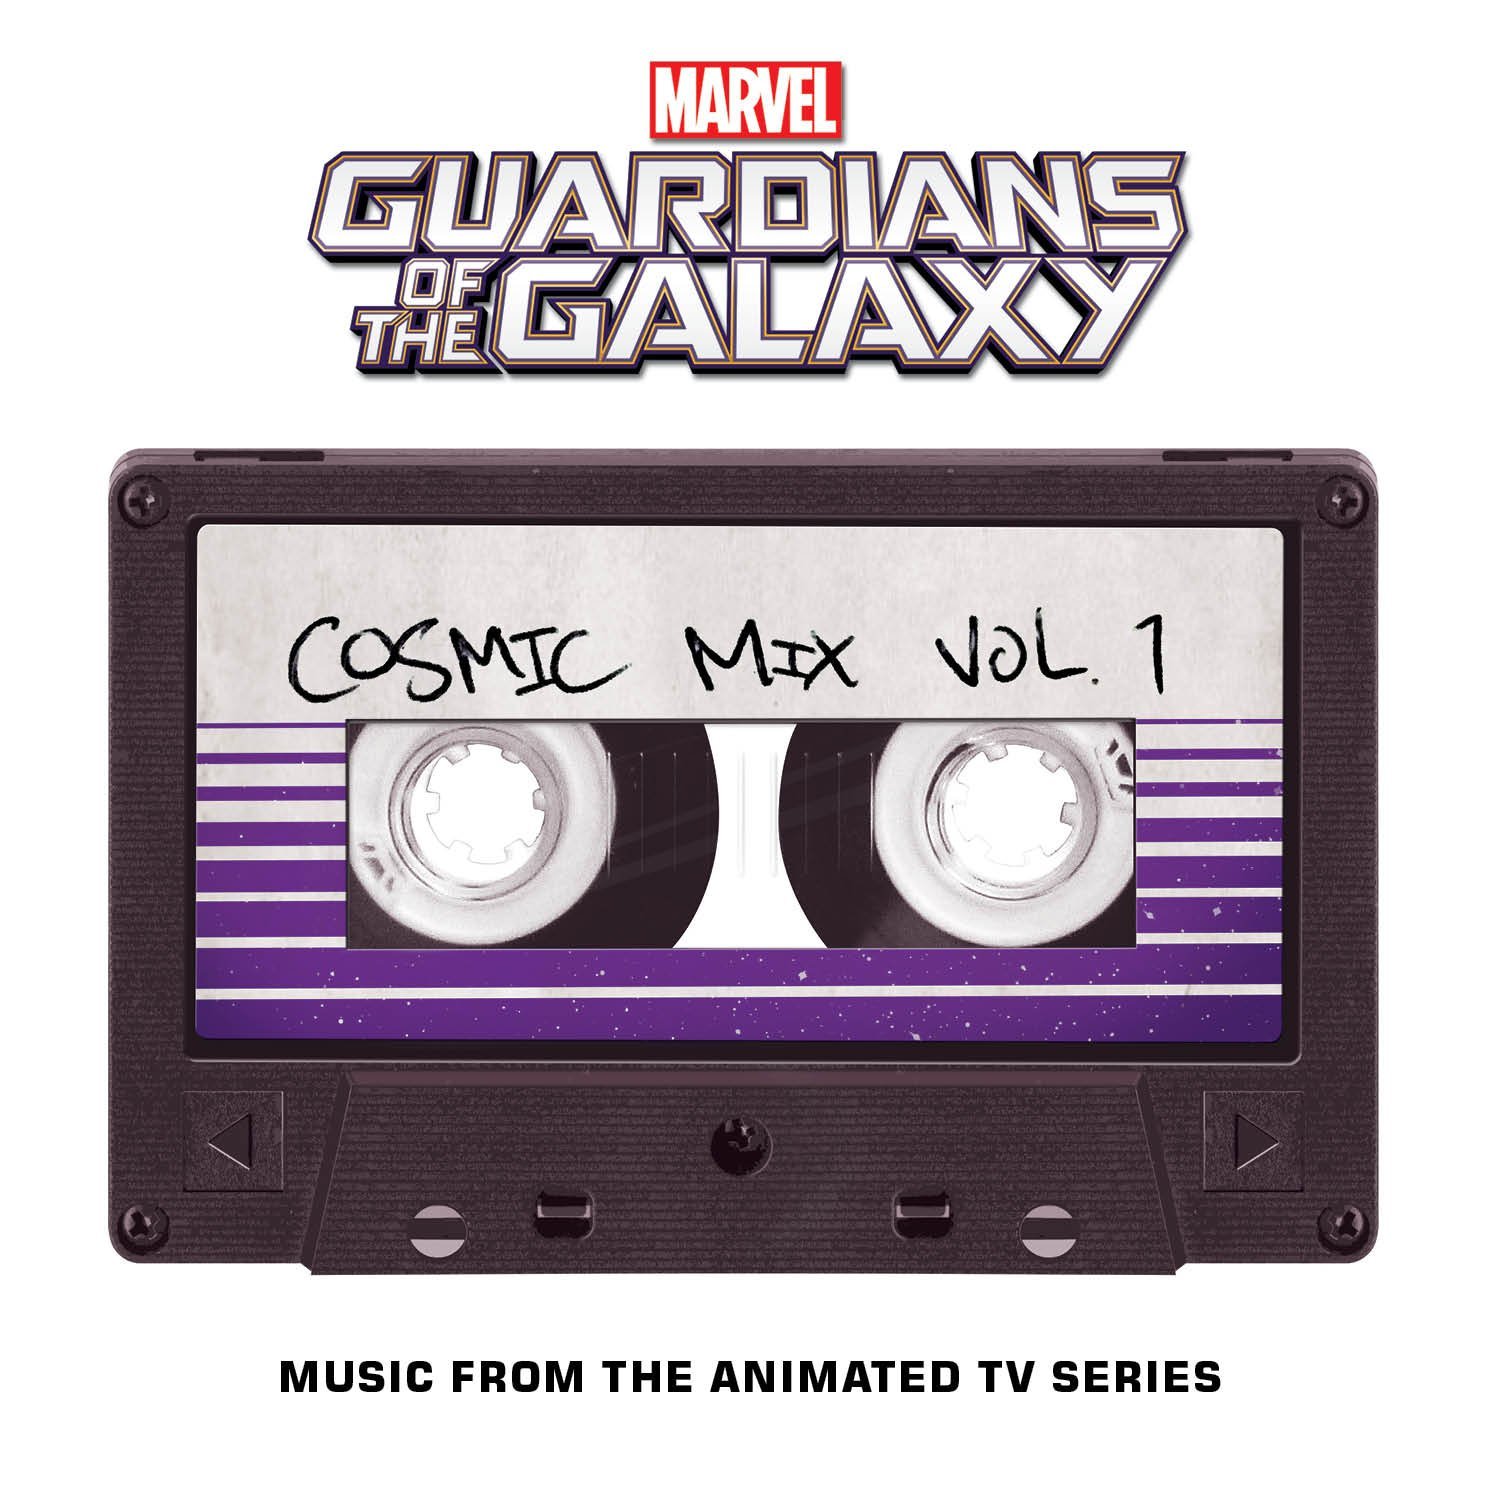 guardians of the galaxy vol 2 soundtrack album cover